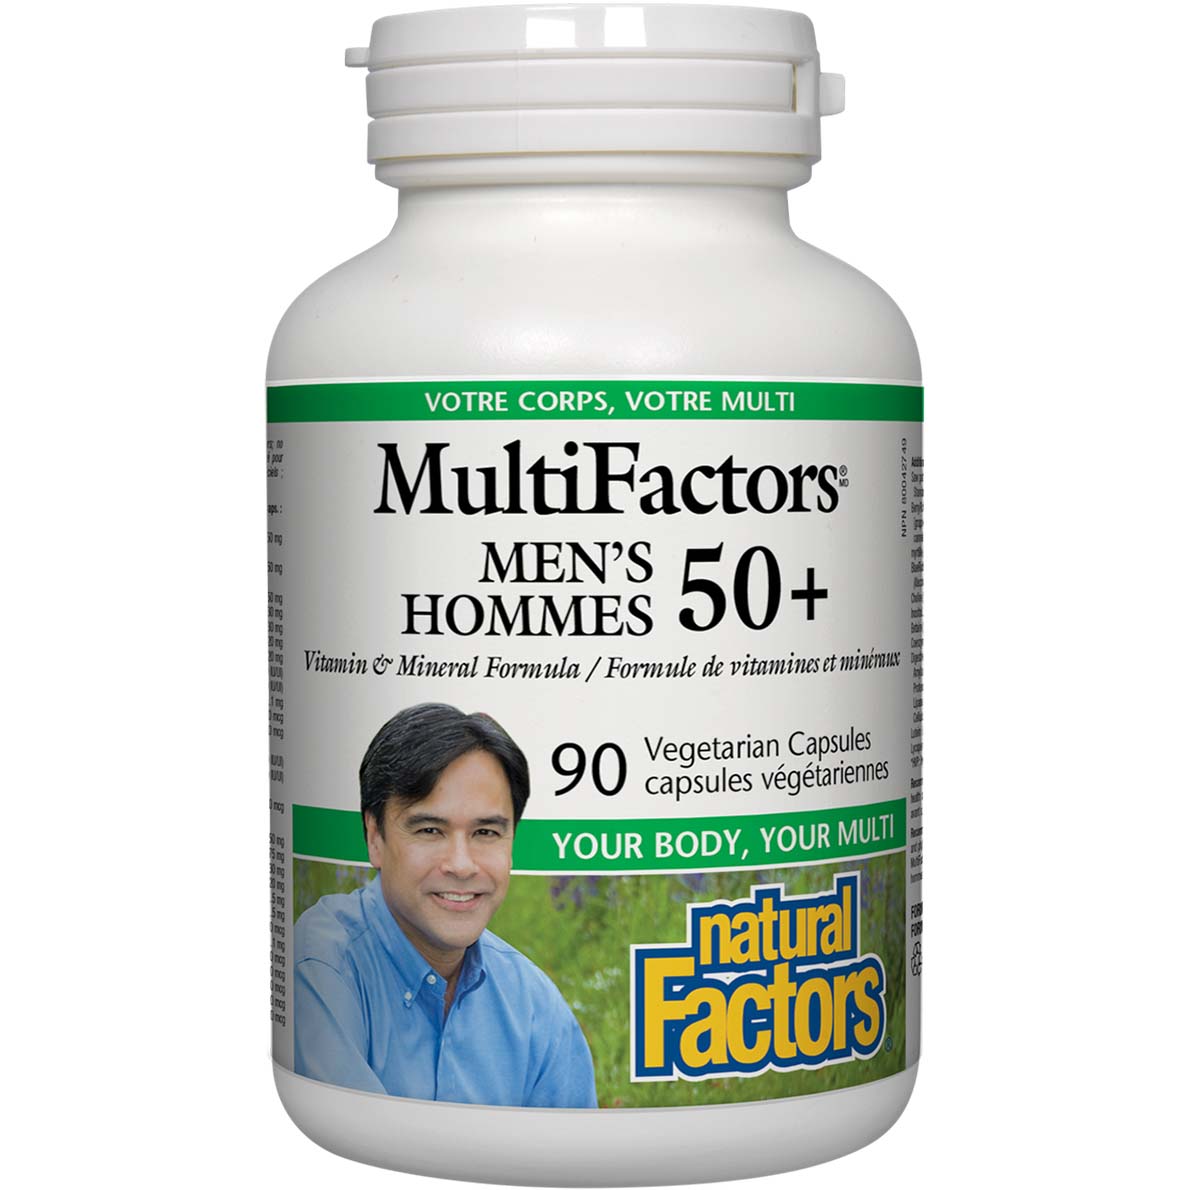 Natural Factors MultiFactors Men’s Hommes 50+, 90 Veggie Capsules